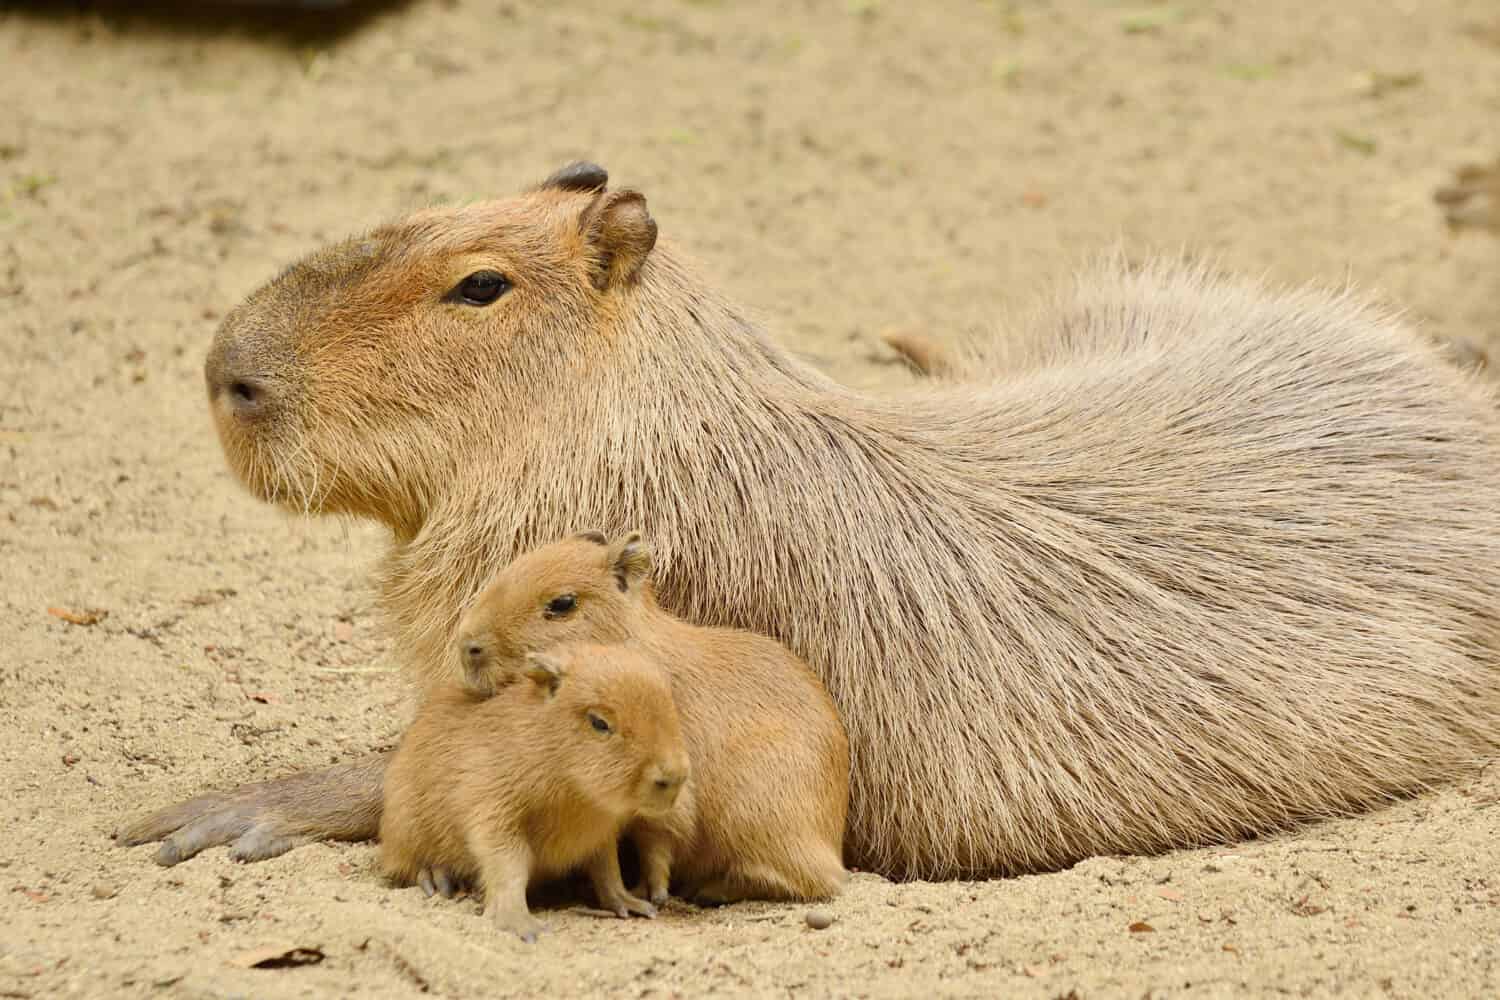 Cute face capybara mammal animal portrait close up (Hydrochoerus hydrochaeris) Portrait of a cute baby capybara.